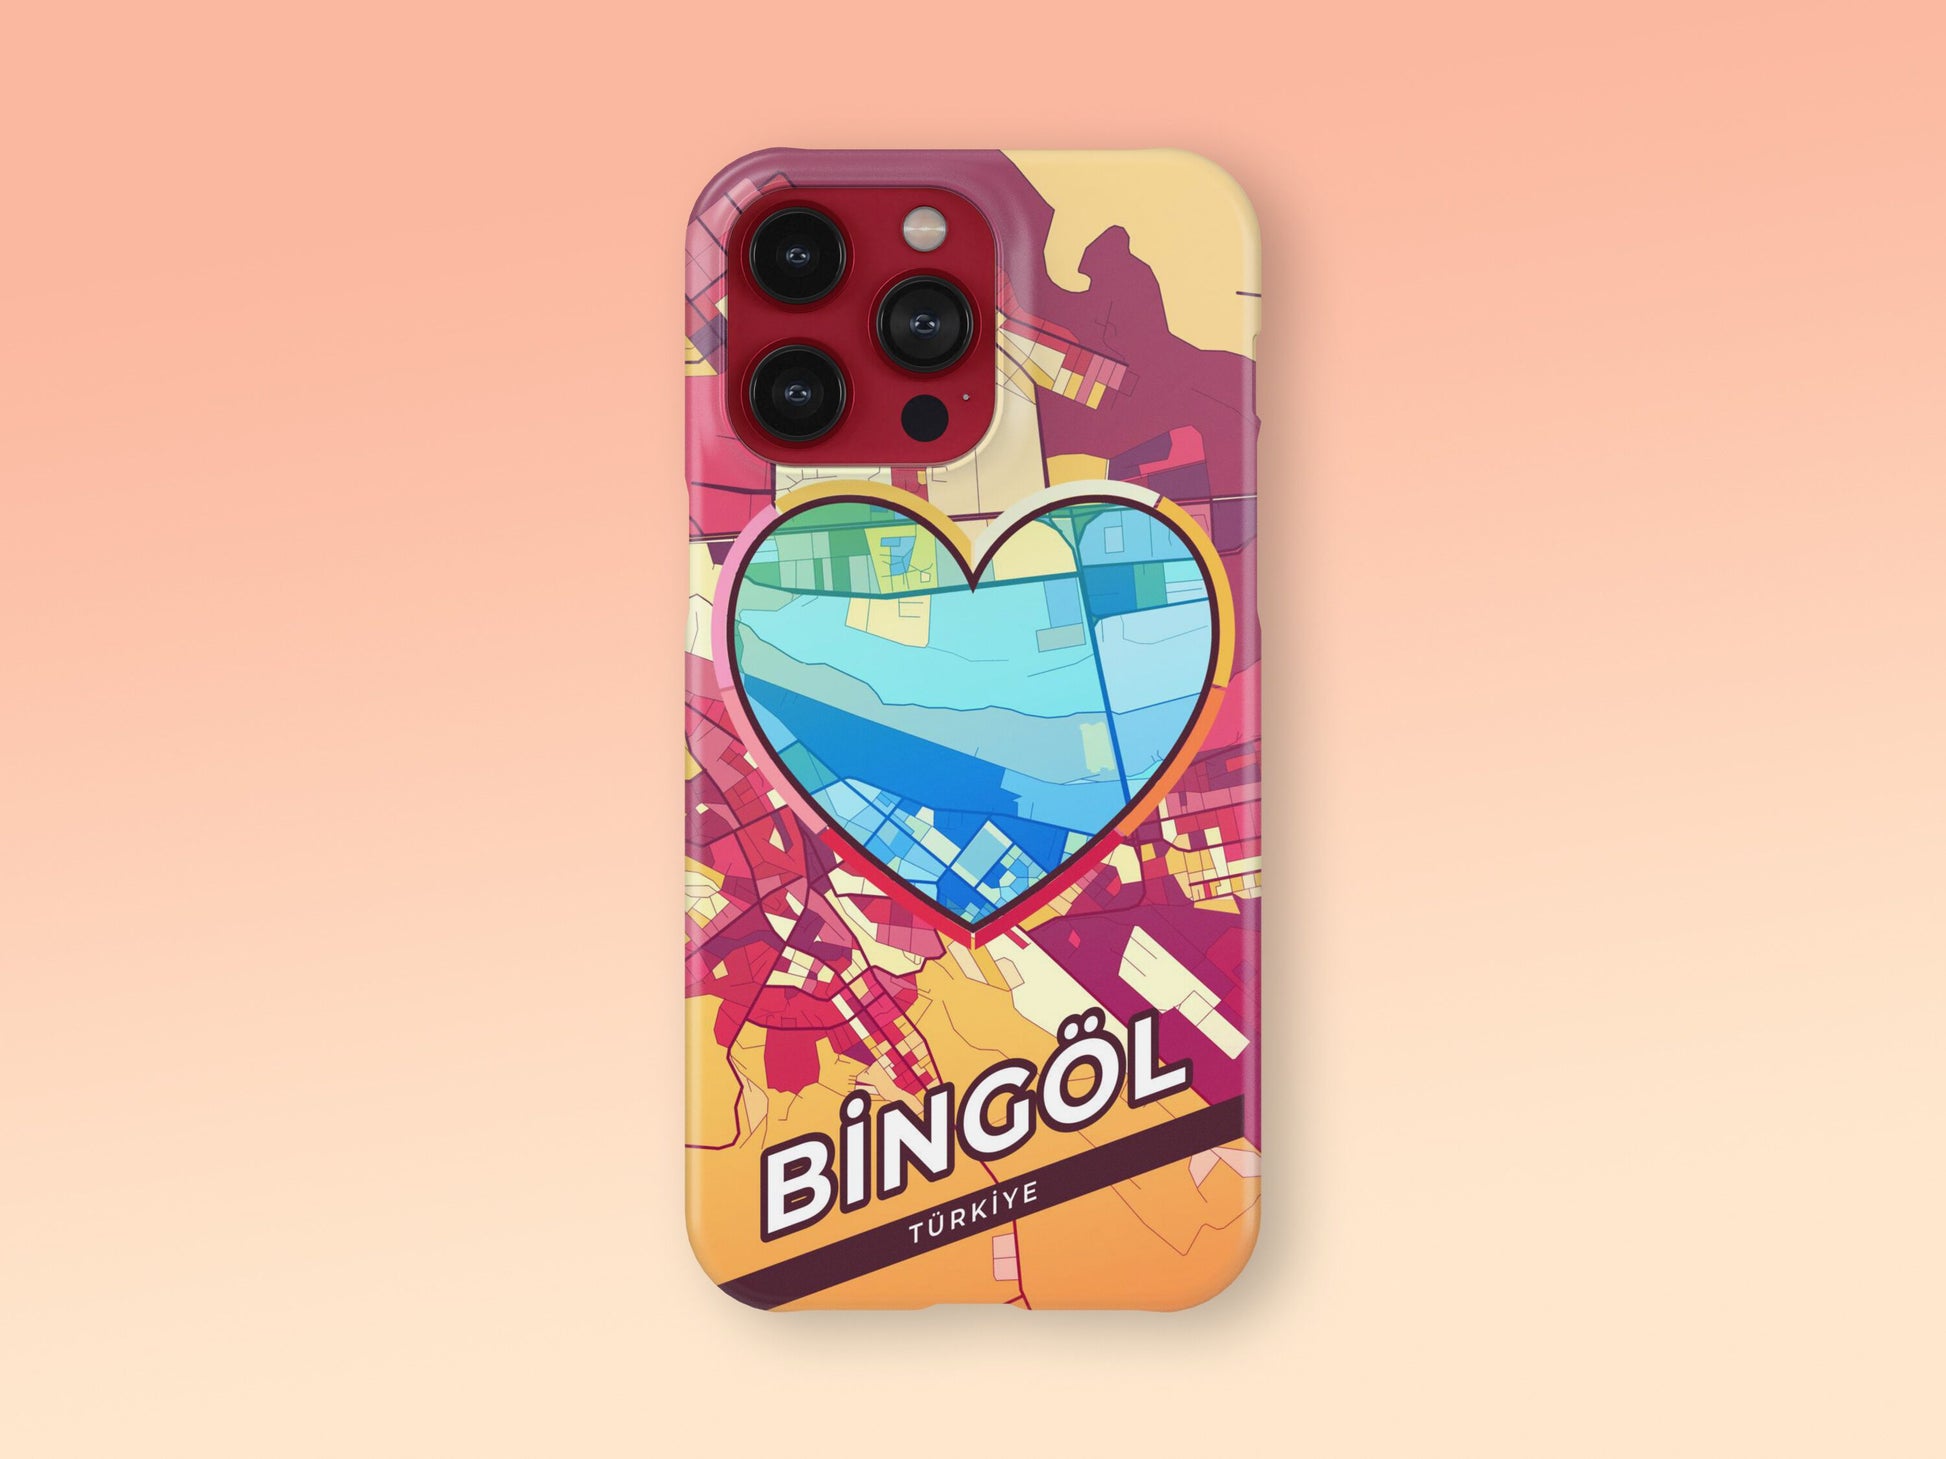 Bingöl Turkey slim phone case with colorful icon. Birthday, wedding or housewarming gift. Couple match cases. 2